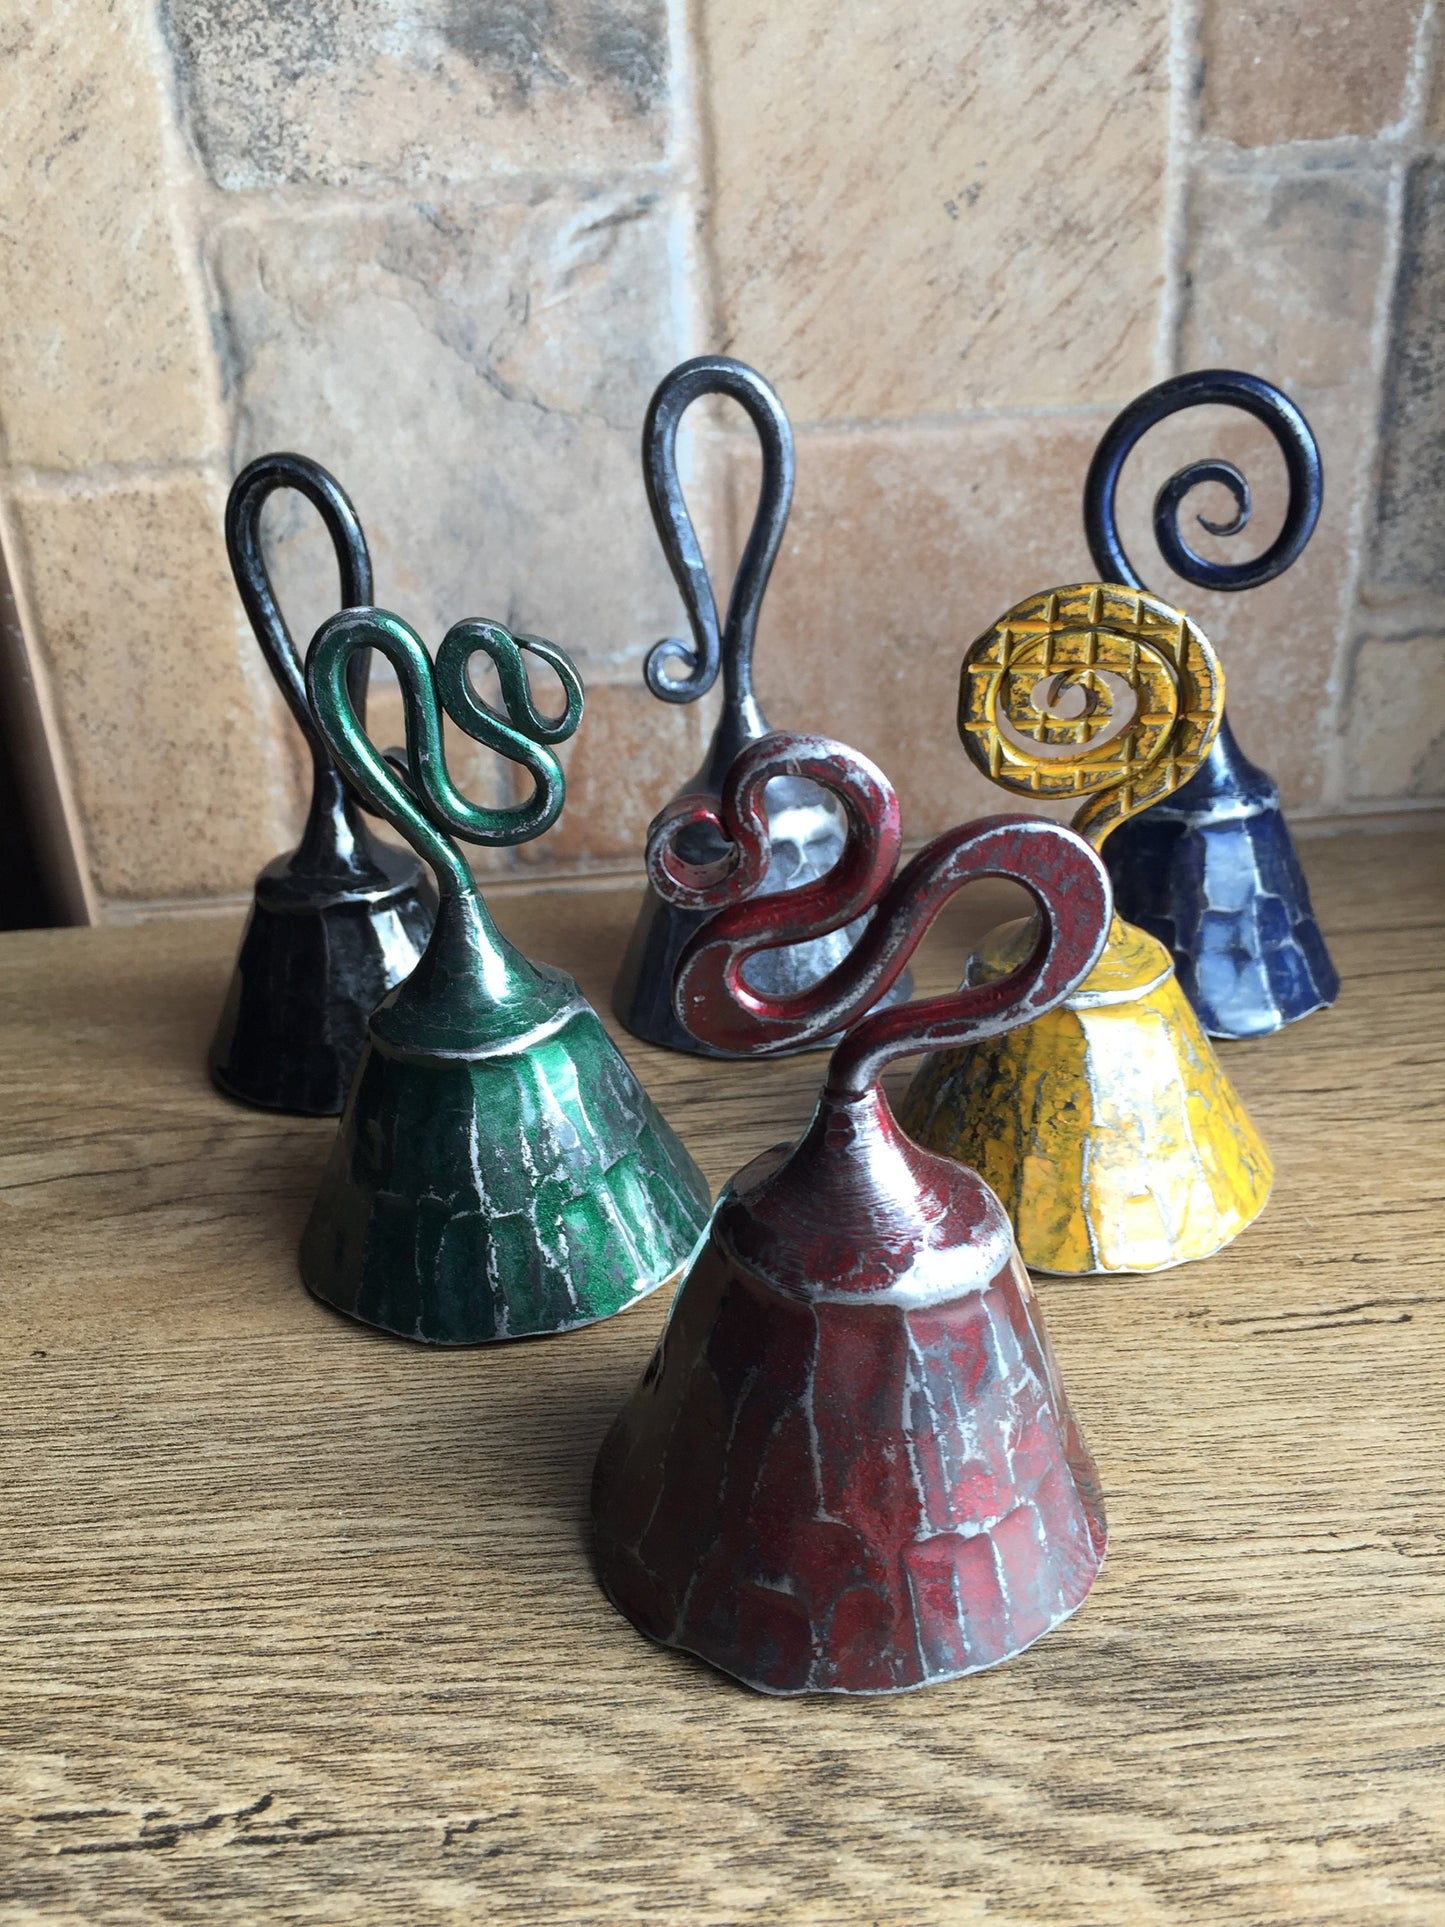 A set of 6 bells, iron bell, hand forged bell, wrought iron bell, handmade bell, hand crafted bell, metal bell, metal art, iron gifts, bell